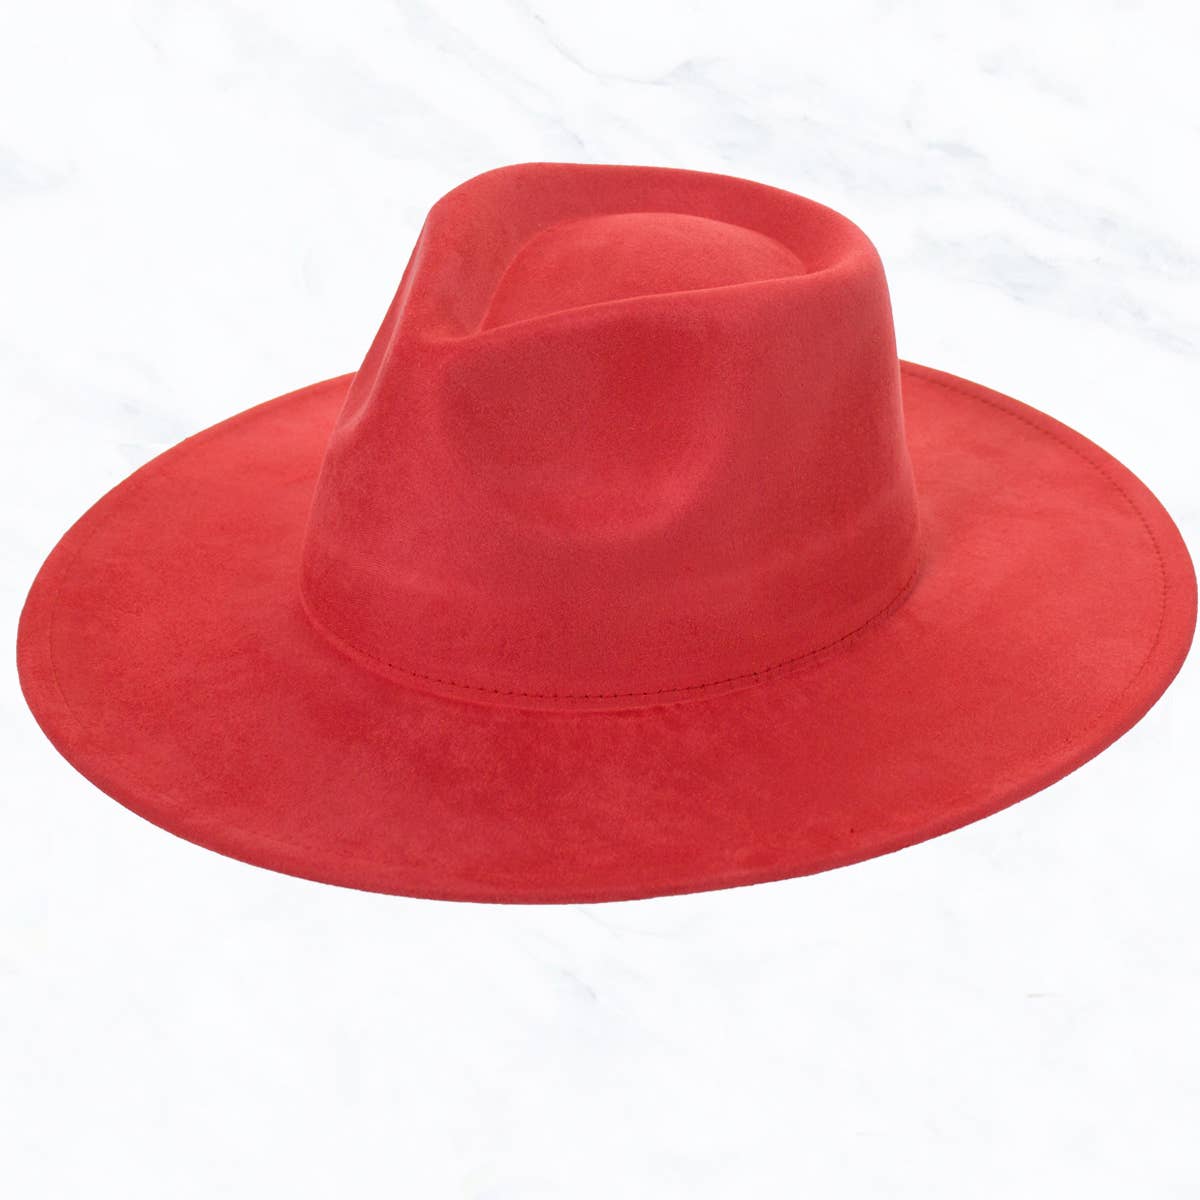 Suzie Q USA - Suede Large Eaves Teardrop Top Fedora Hat: Light Grey